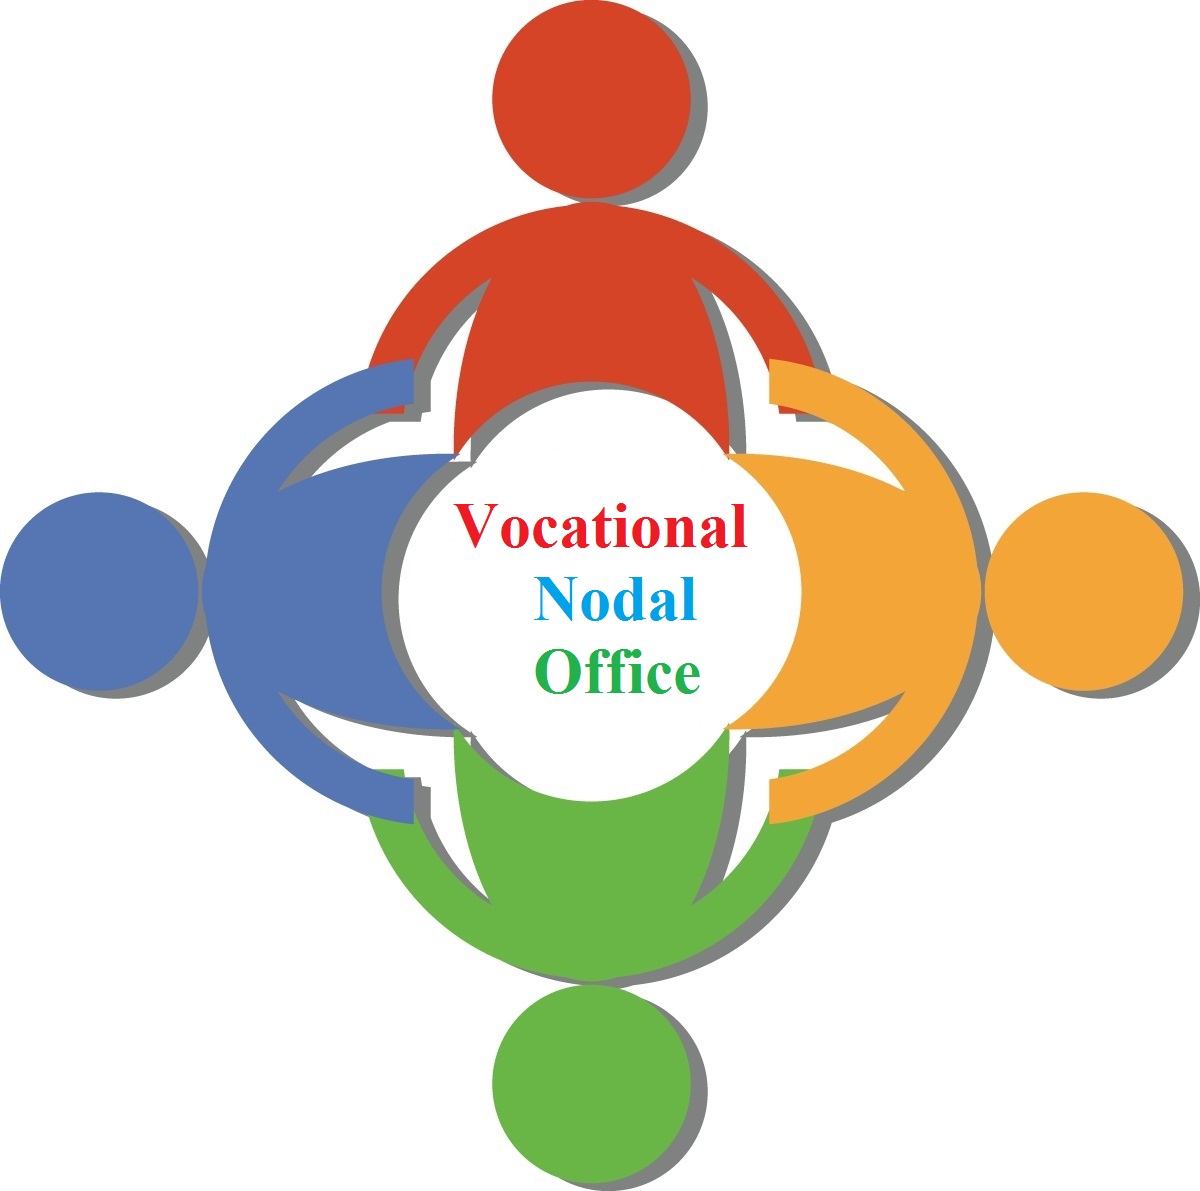 Vocational Nodal Office